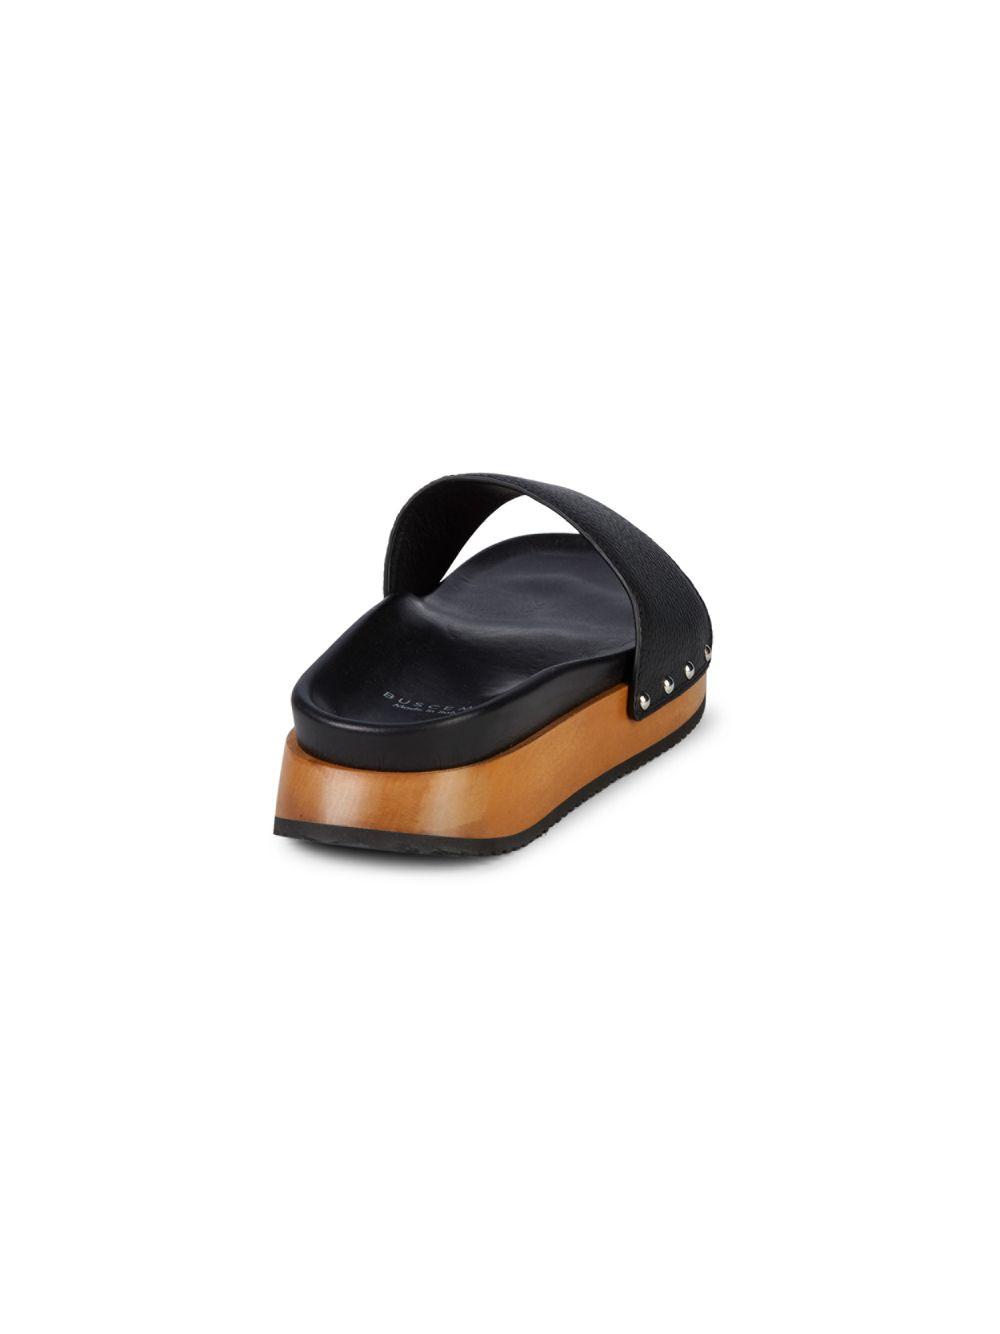 Buscemi Topanga Leather & Wood Slide Sandals in Black | Lyst